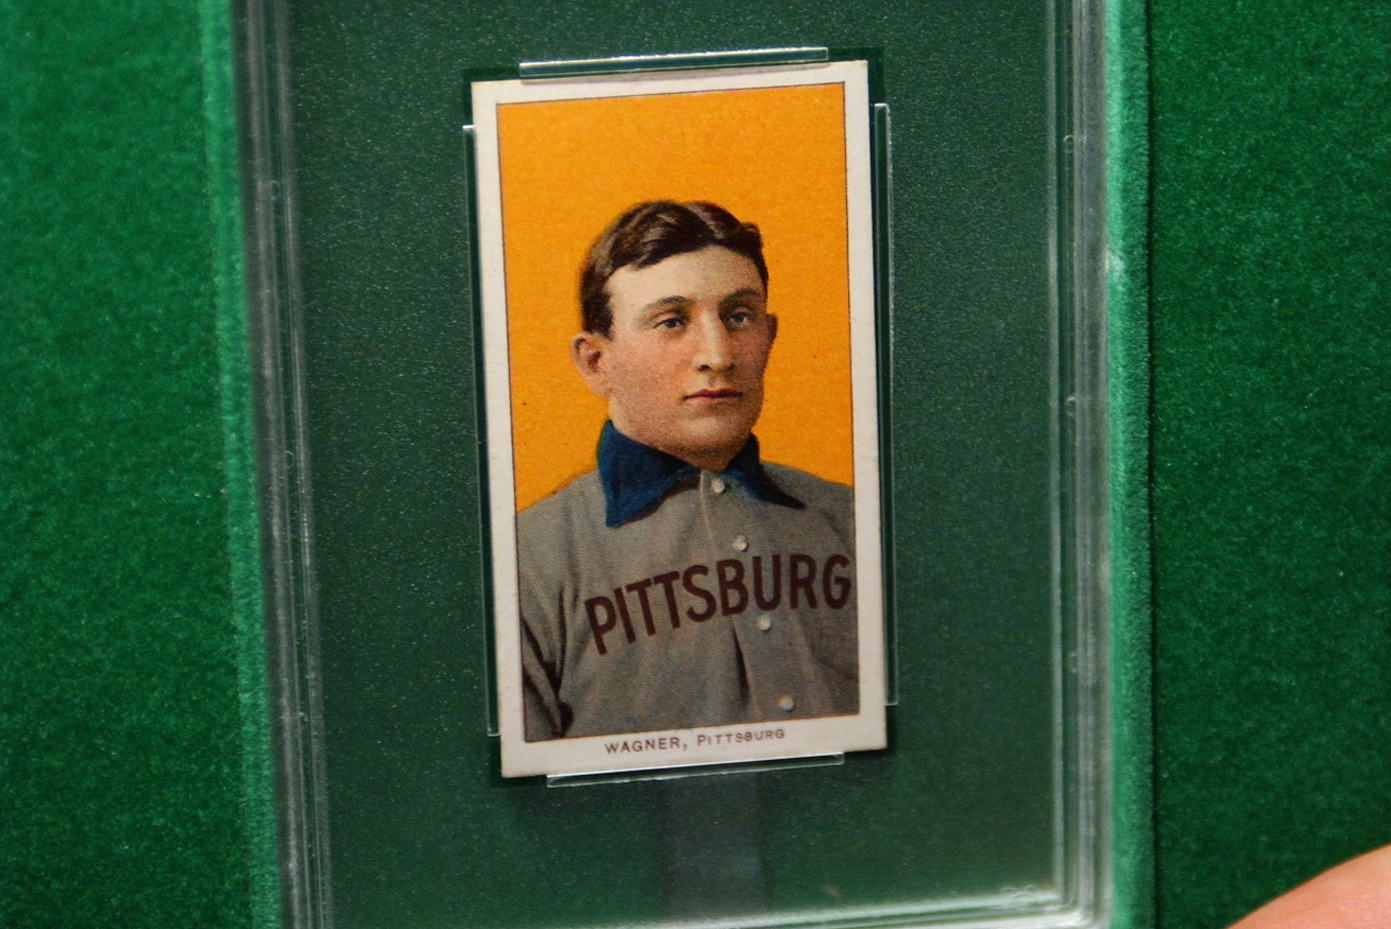 Honus Wagner tobacco baseball card from 1909 sells for $6.6m